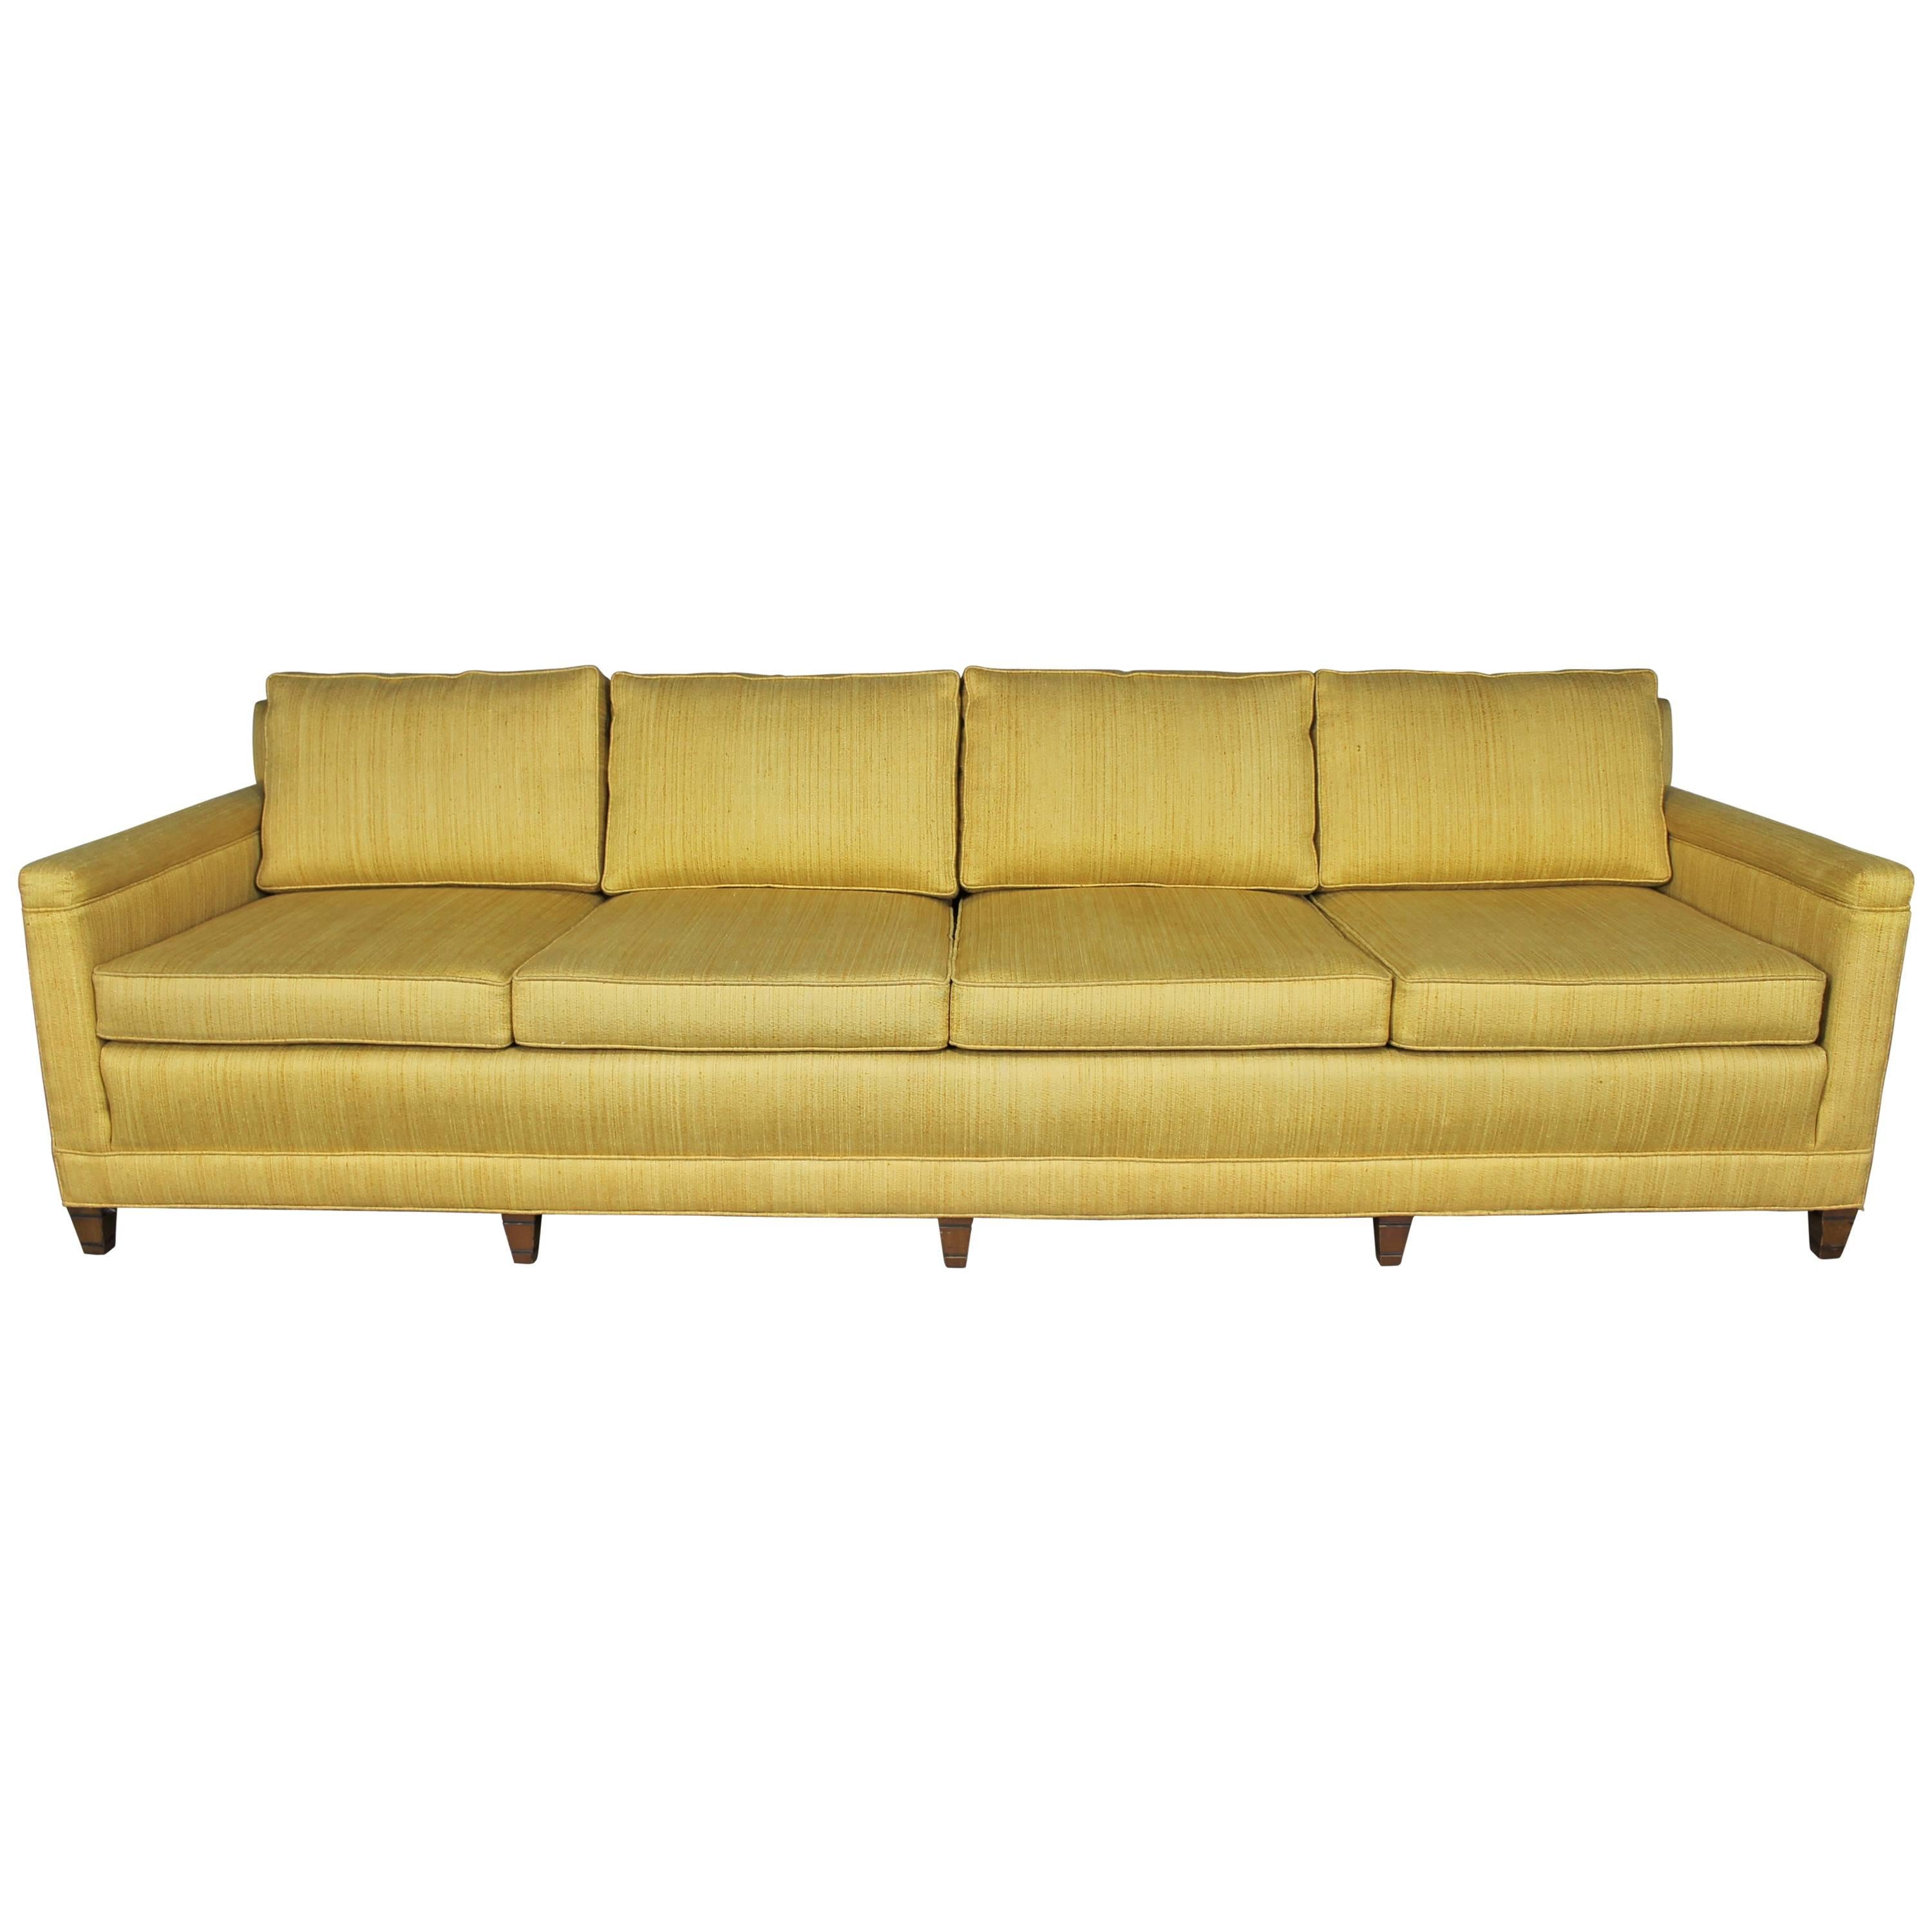 Vintage Mid-Century Four Cushion Extra-Long Lawson Style Golden Yellow Sofa